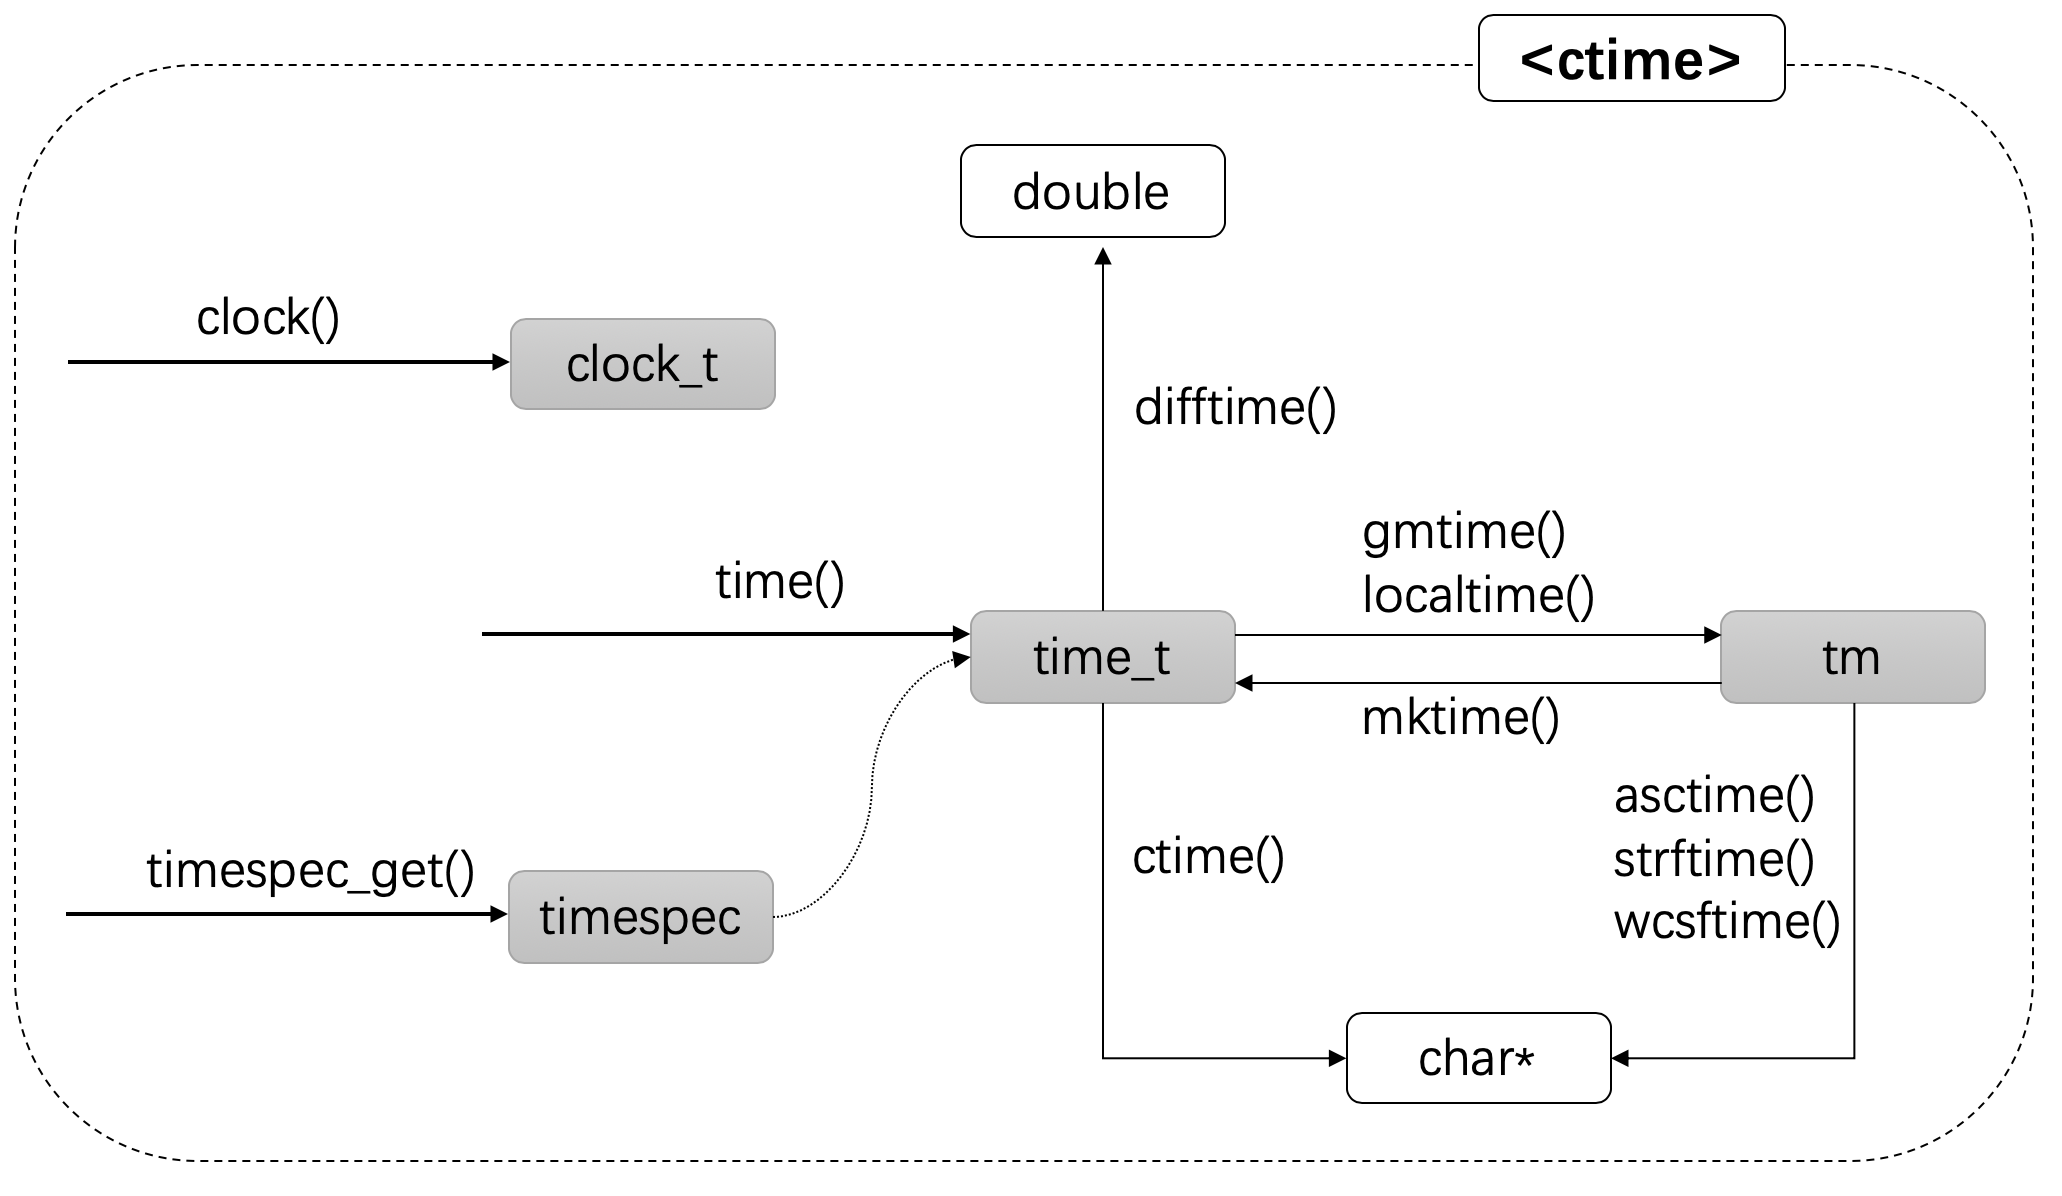 C++ 日期和时间编程总结